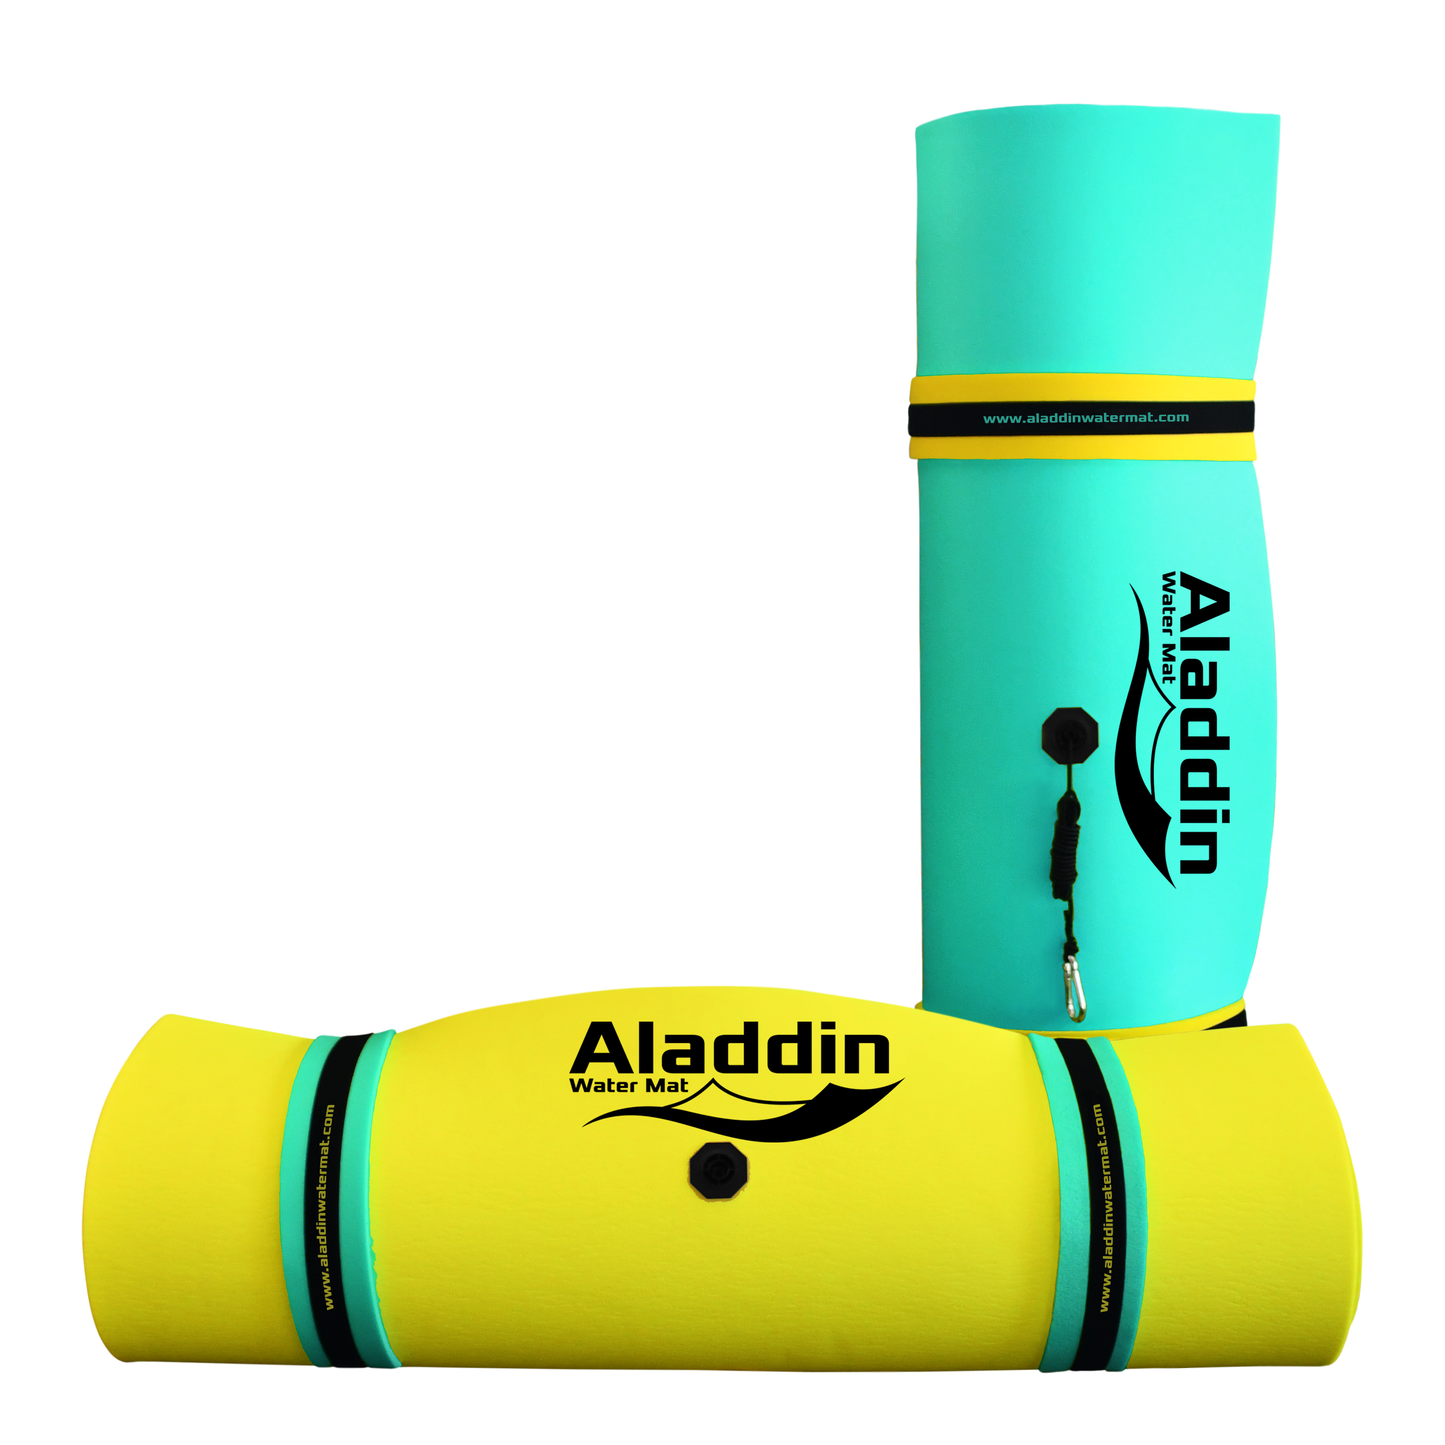 Aladdin Water Mat™  (9x6) Floating Water Mat, Premium Foam (Green/Black/Yellow)